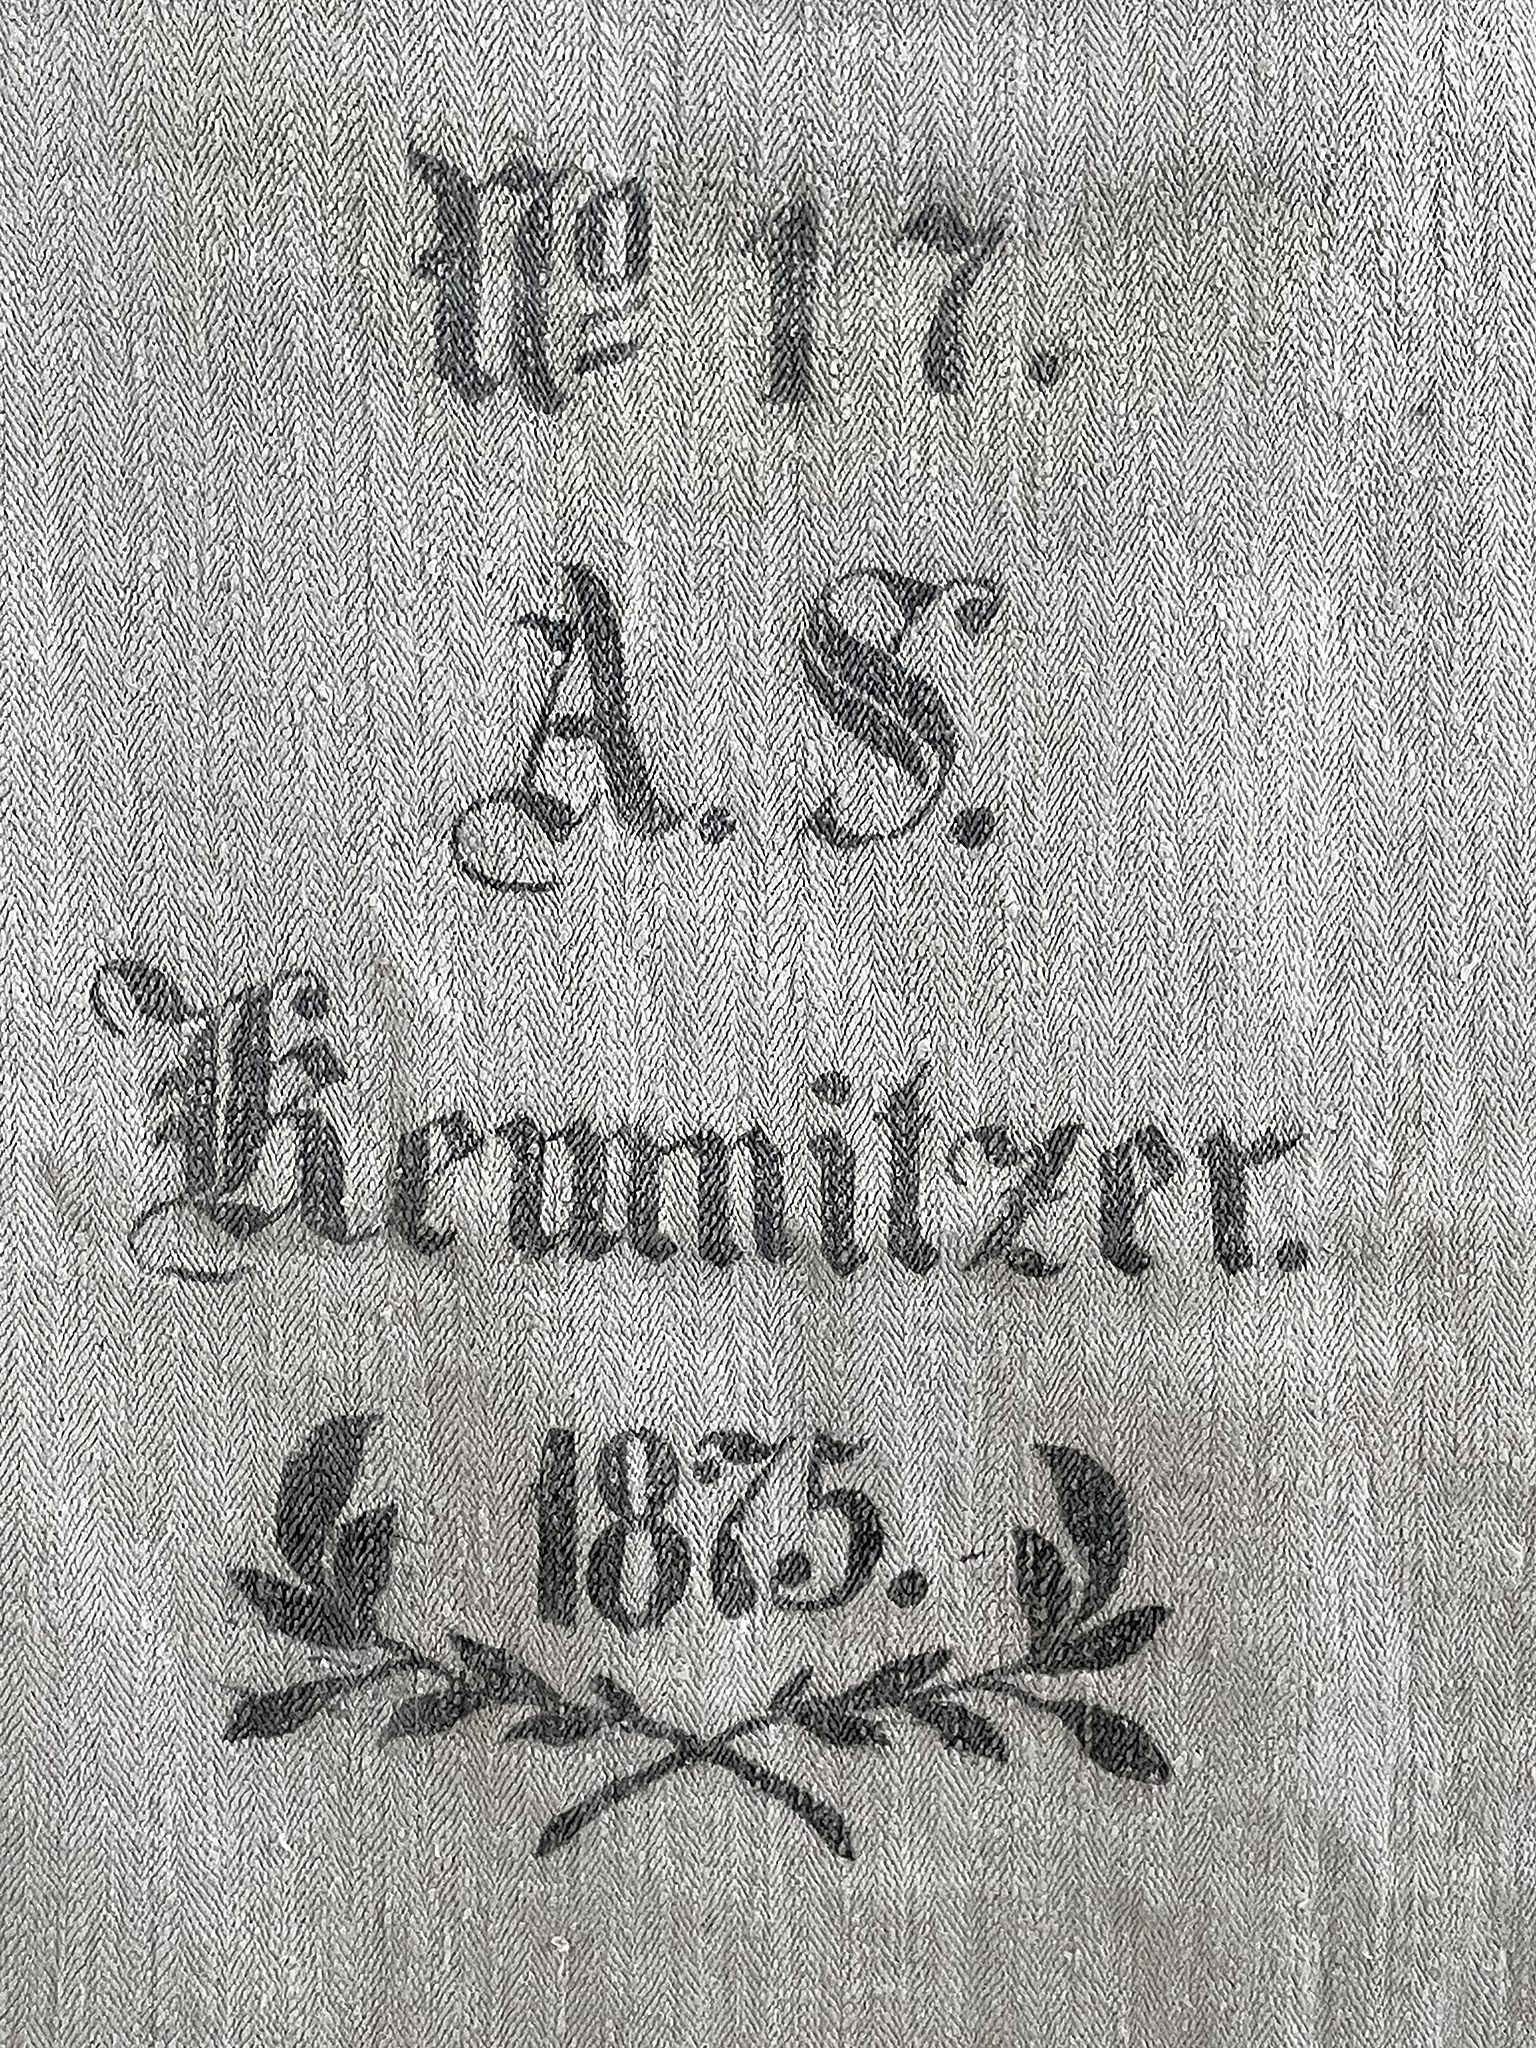 Antiker heller Leinensack/ Mehlsack 1875***